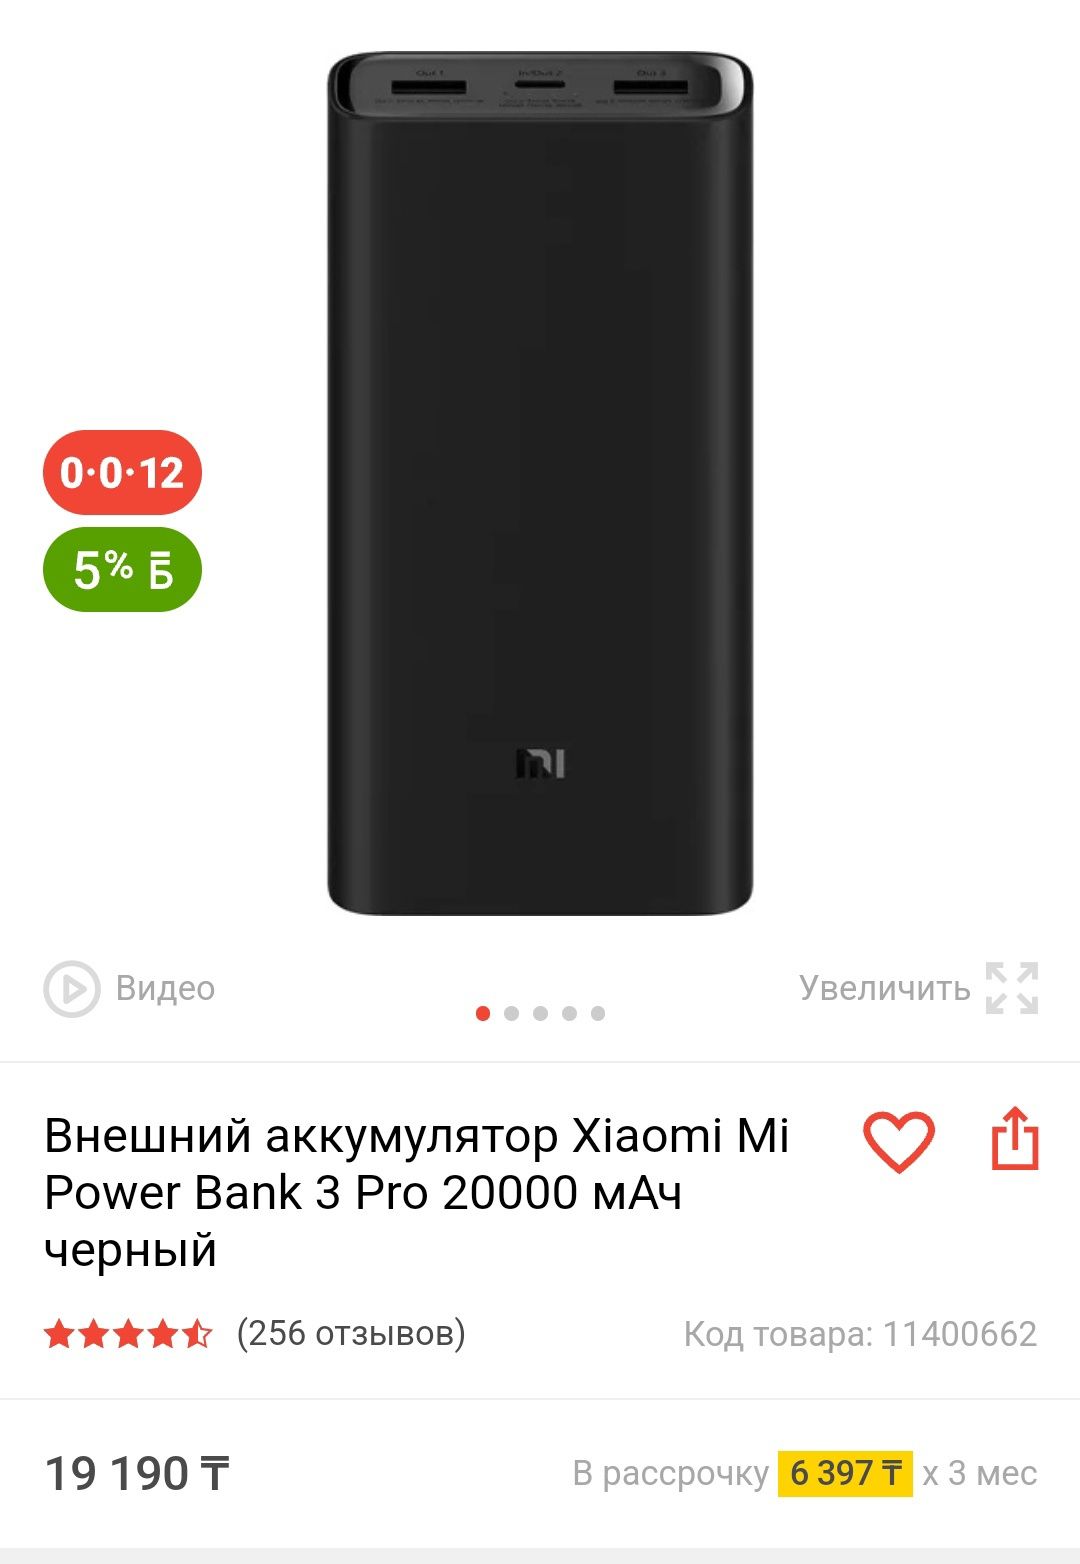 Пауэрбанк Xiaomi Mi 3